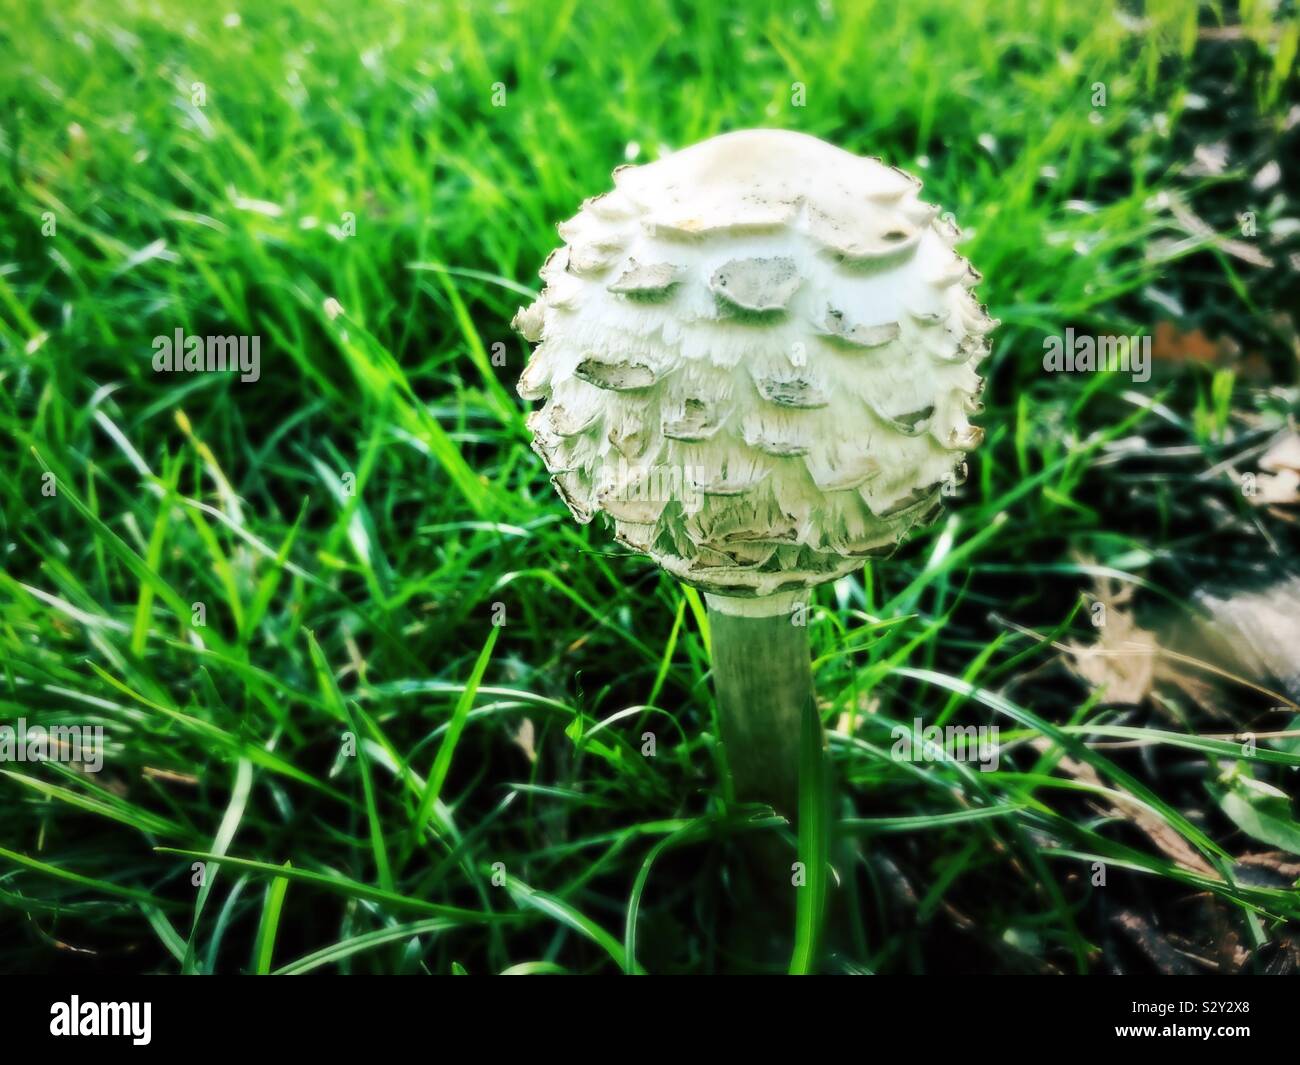 Calvatia  gigantea commonly known as Giant puffball mushroom Stock Photo